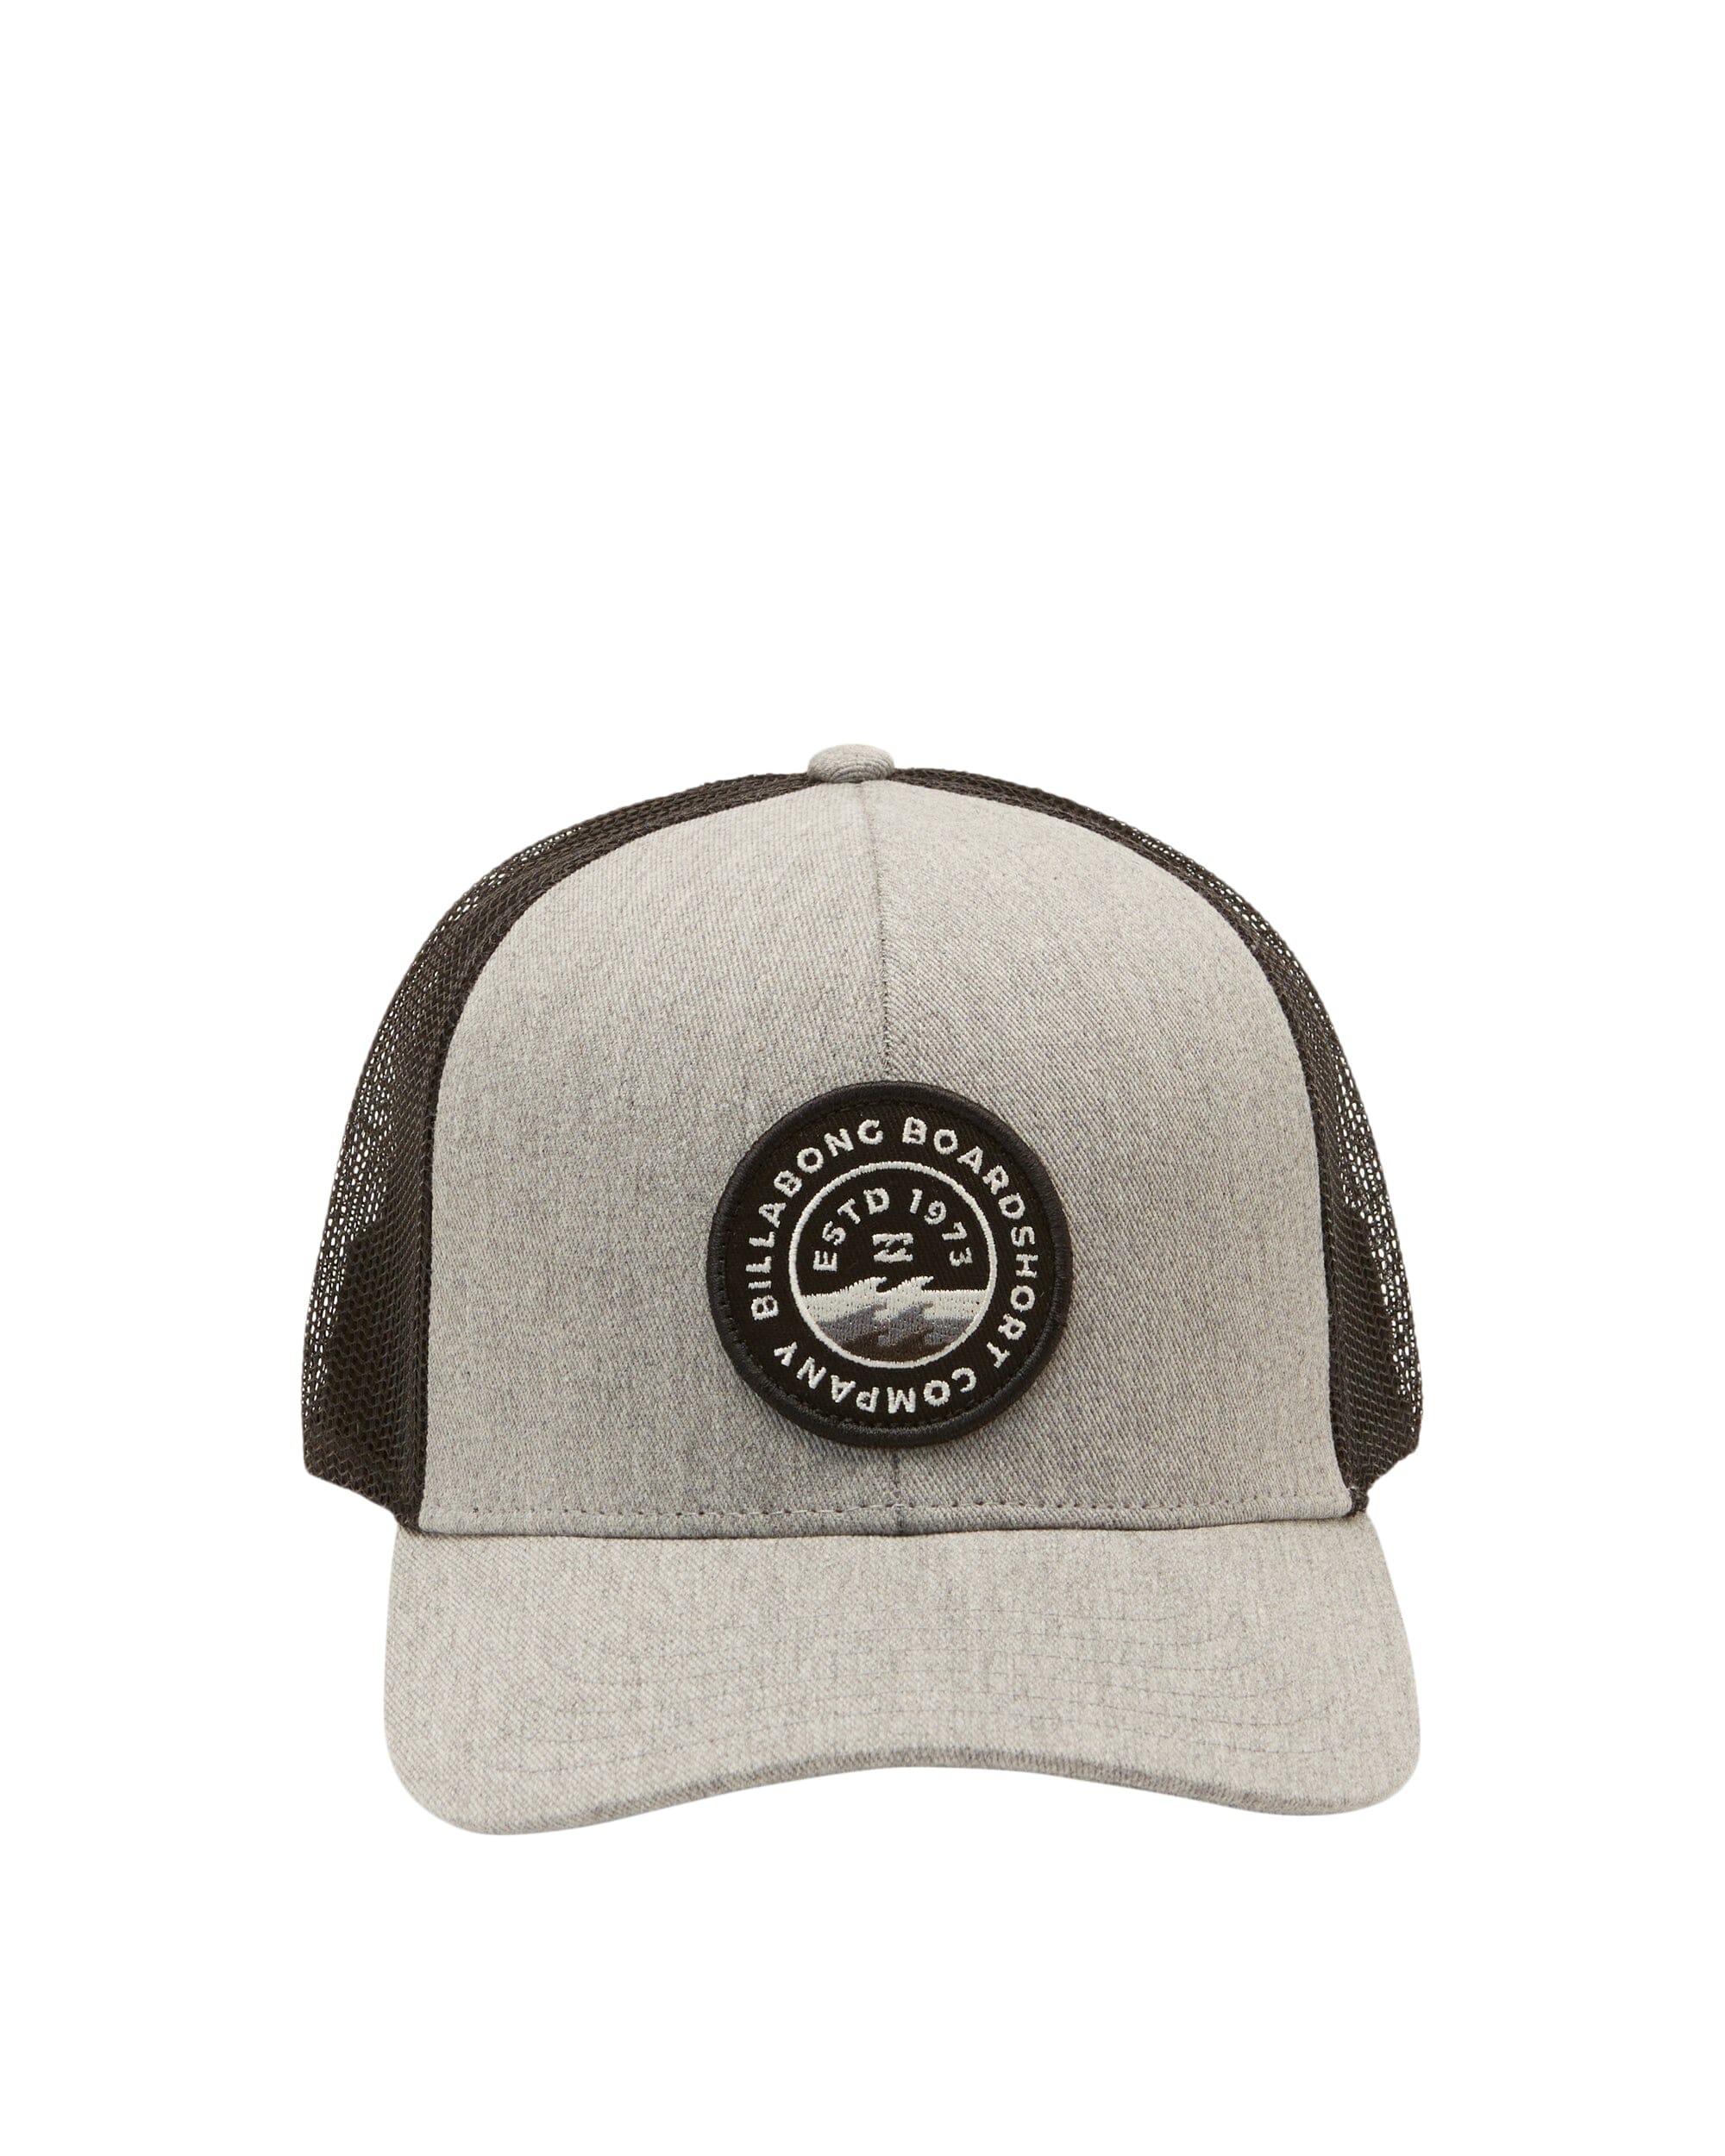 BILLABONG Boys Walled Trucker Hat Grey Black Boy's Hats Billabong 